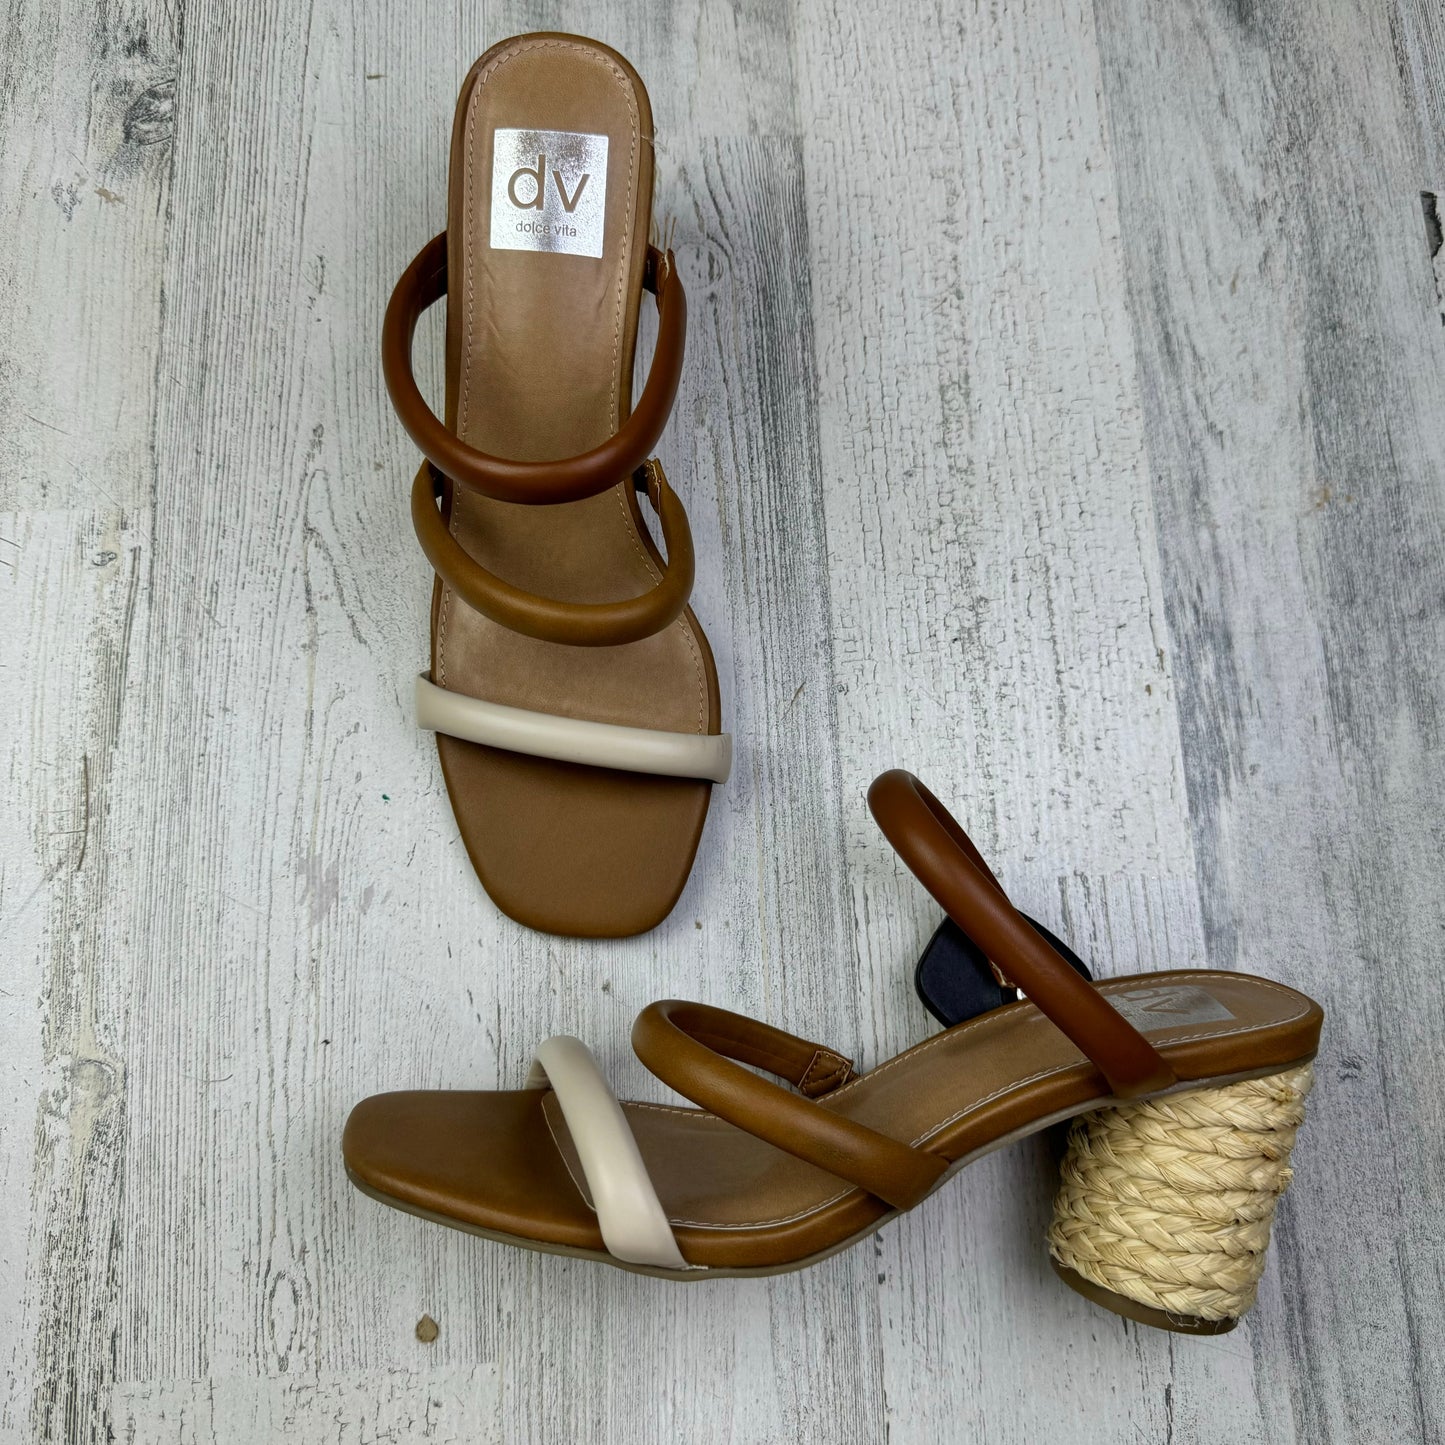 Brown & Cream Sandals Heels Block Dv, Size 7.5